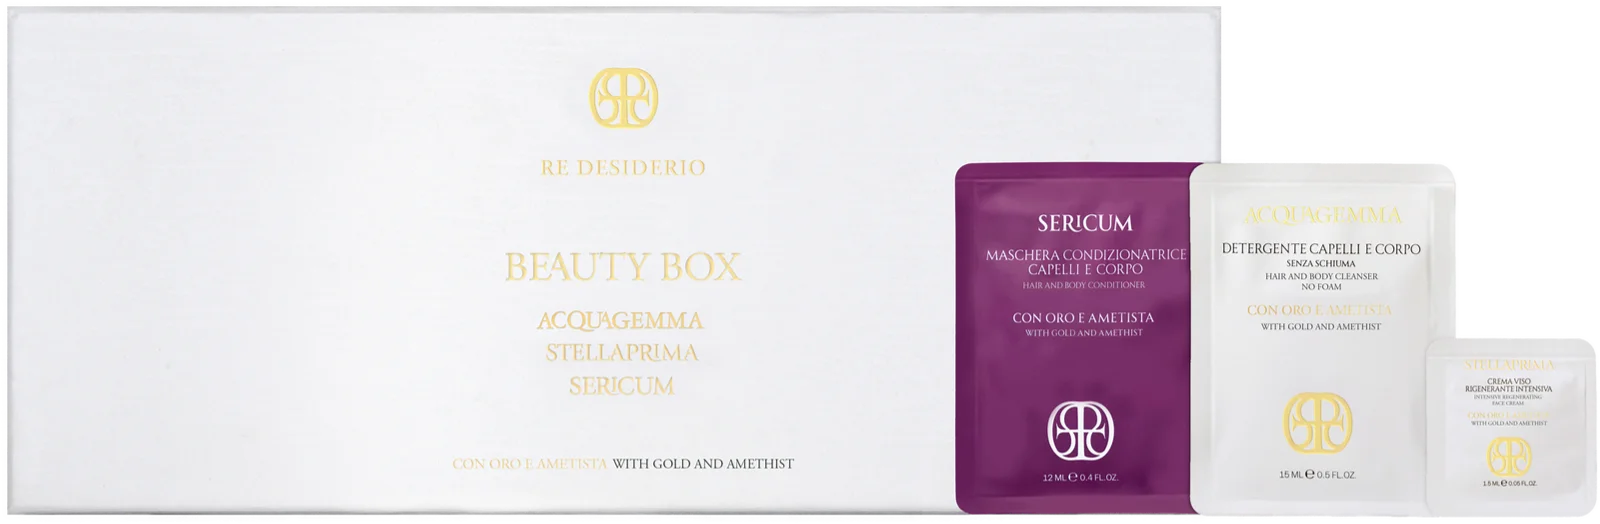 Marygrace Beauty Box Acquagemma + Sericum + Stellaprima